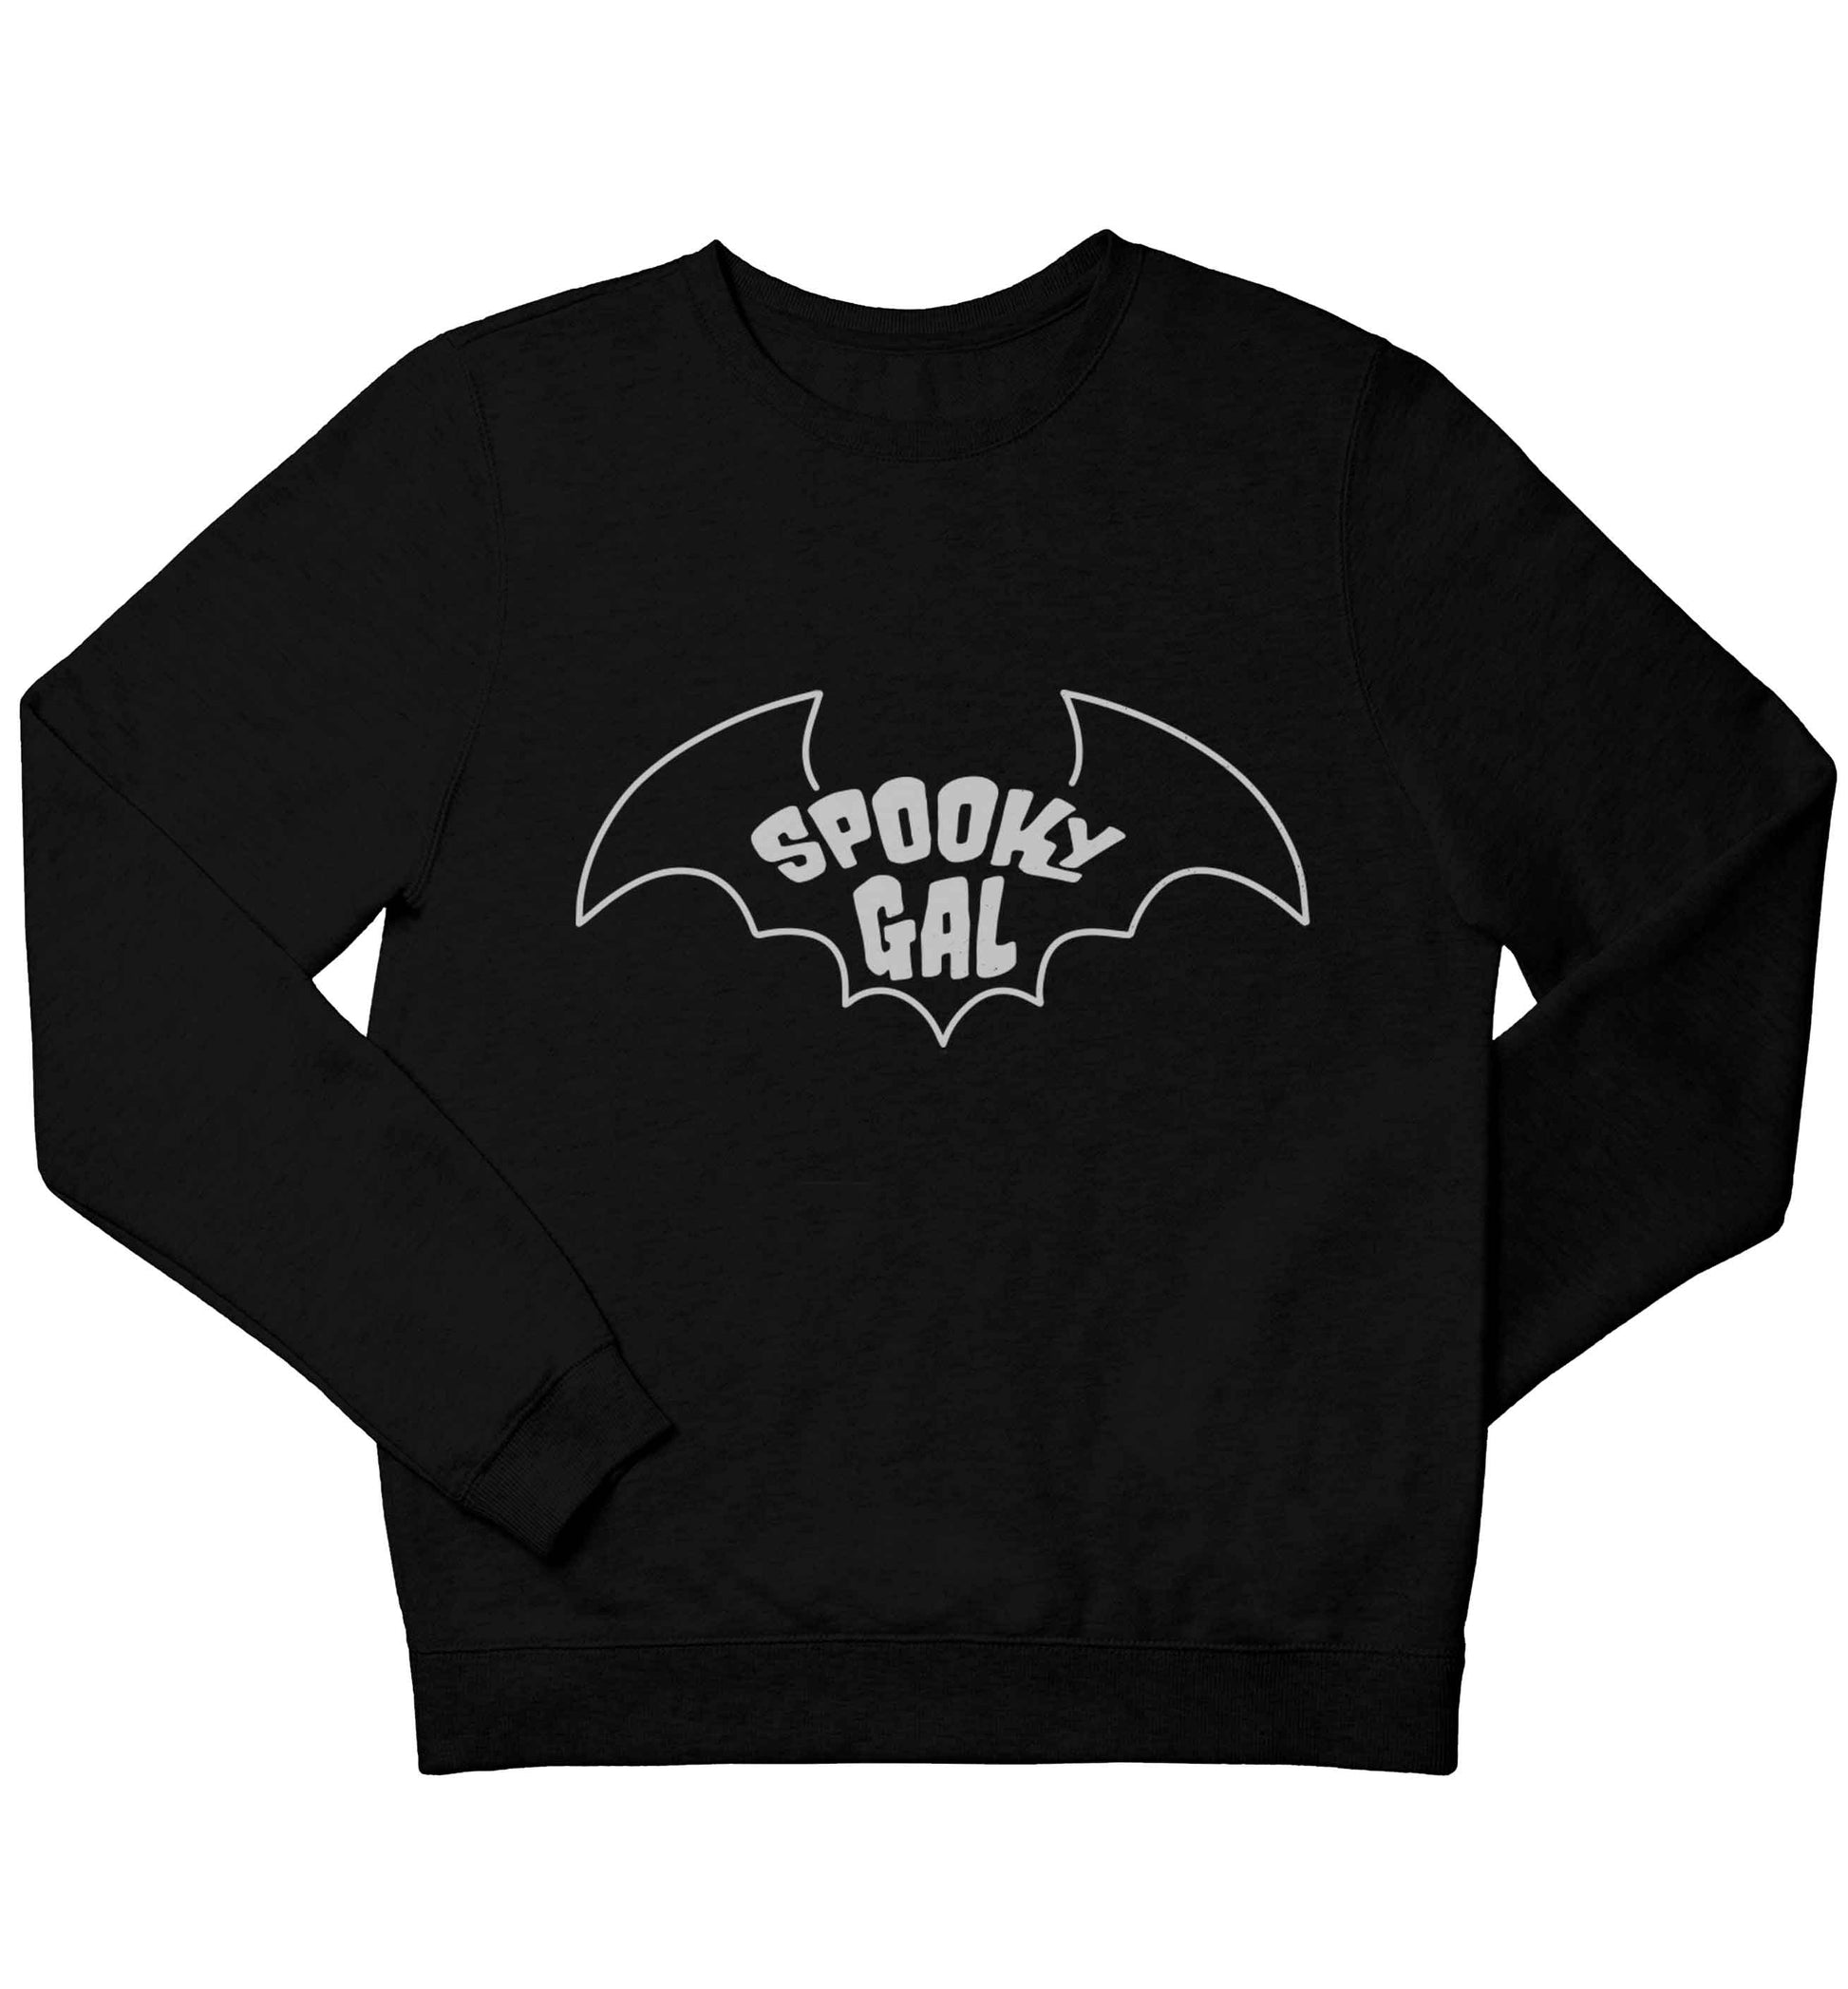 Spooky gal Kit children's black sweater 12-13 Years